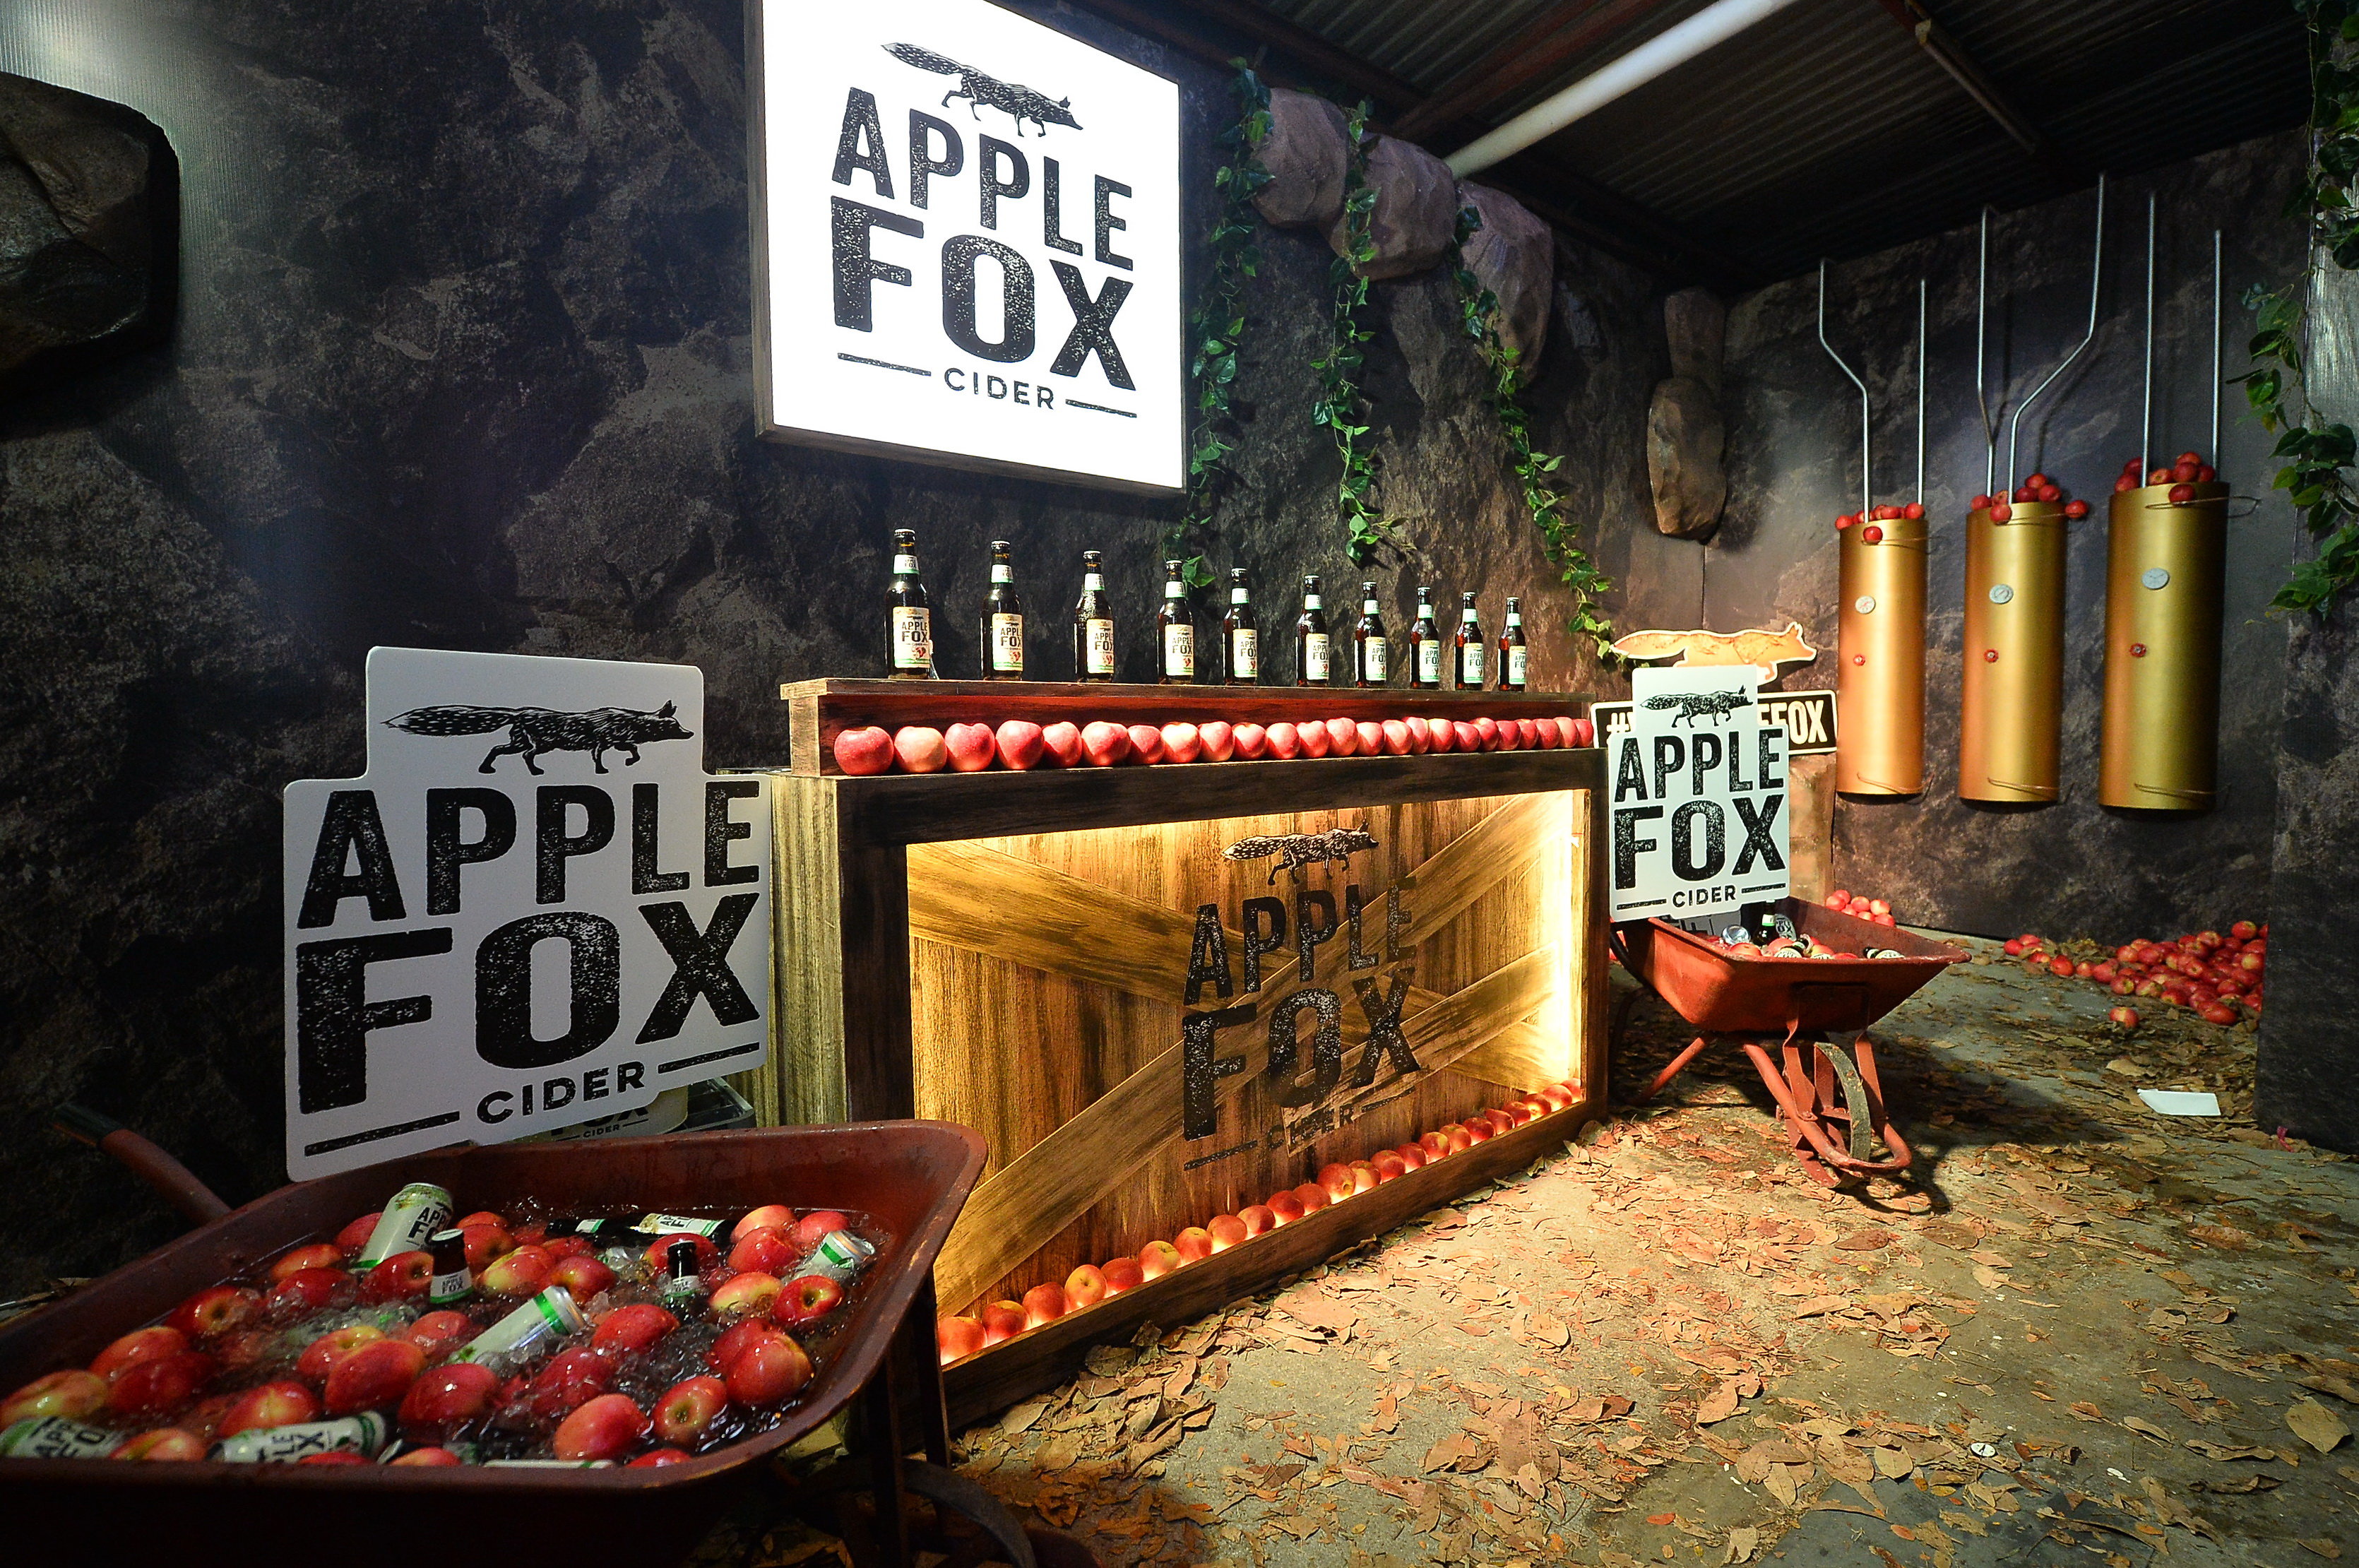 Apple Fox 苹果酒